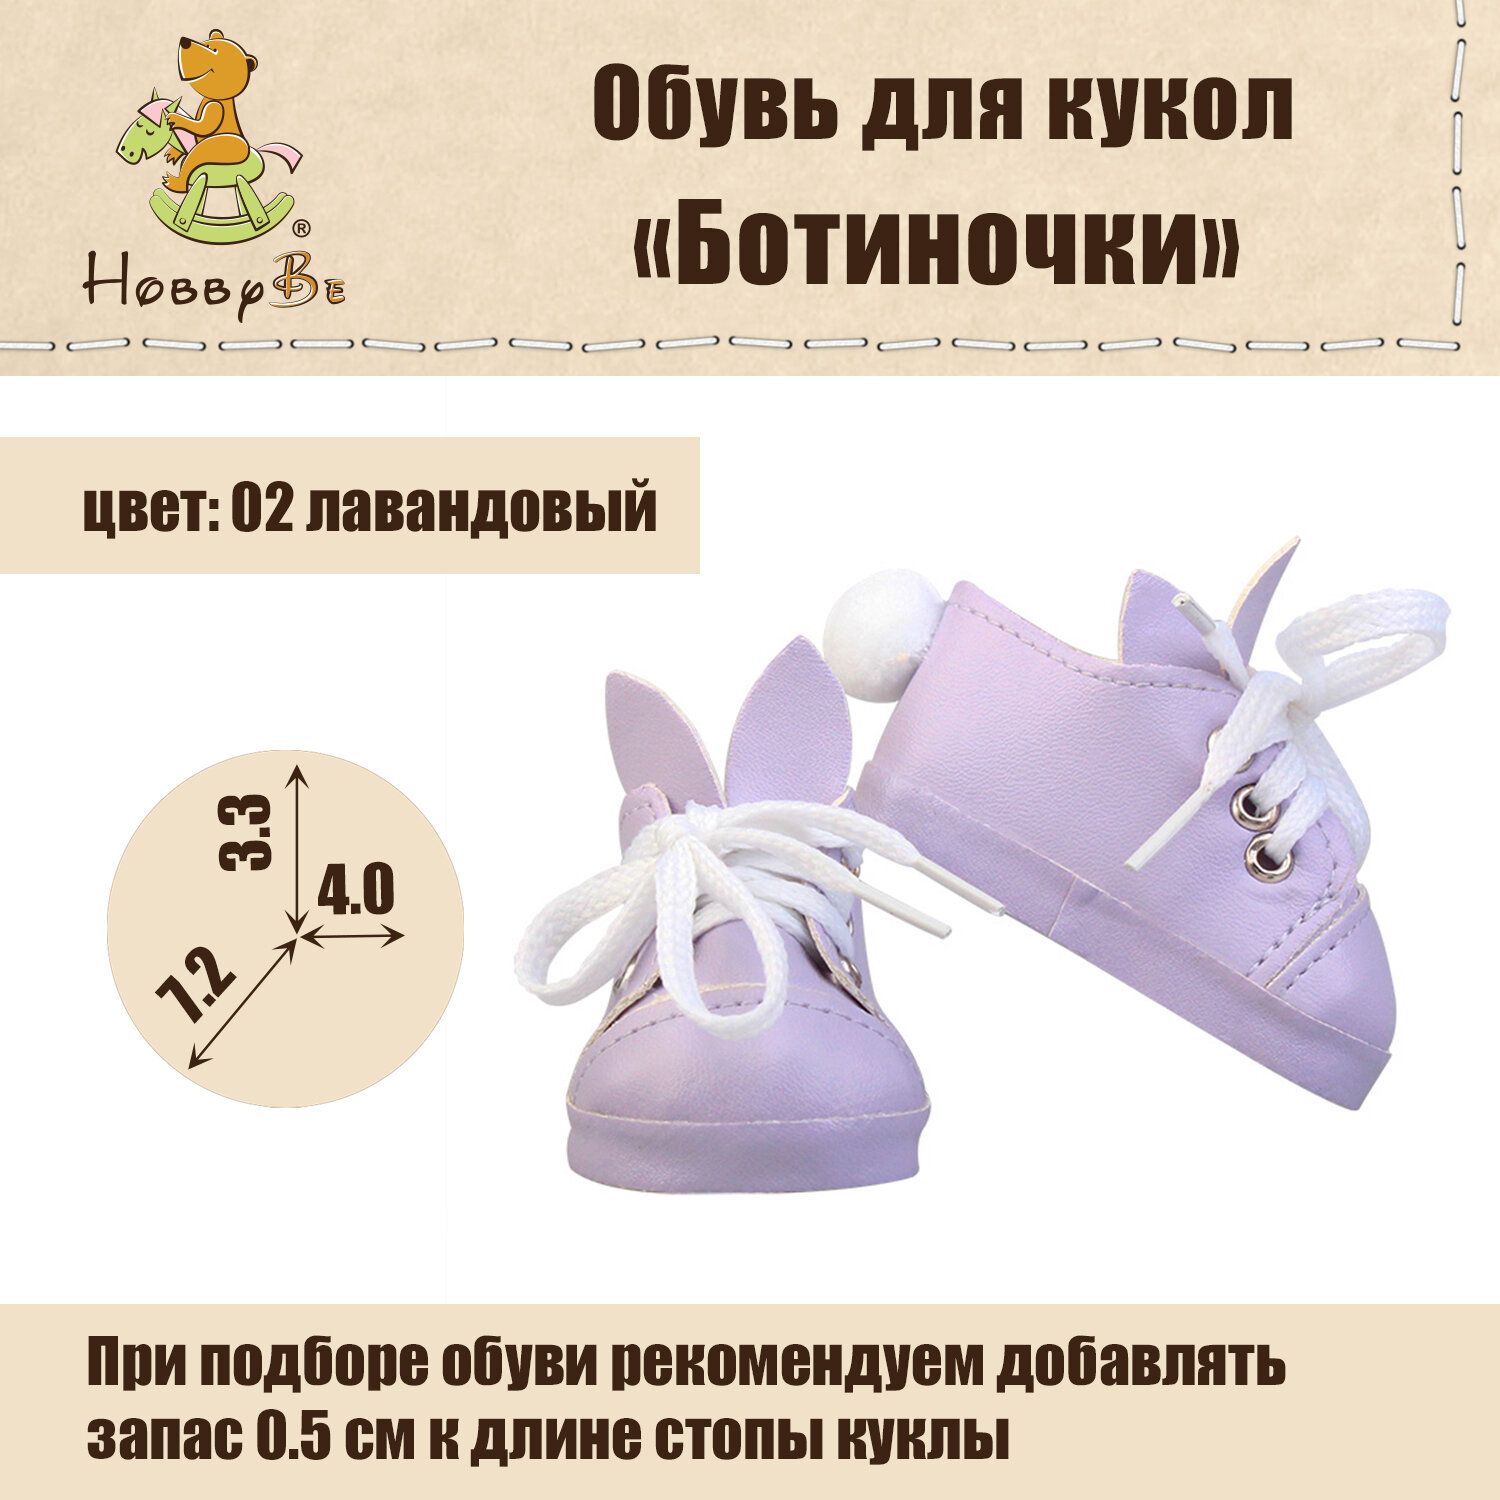 Обувь для кукол "HobbyBe" KBG-3 аксессуары "Ботиночки" 7 см 02 лавандовый